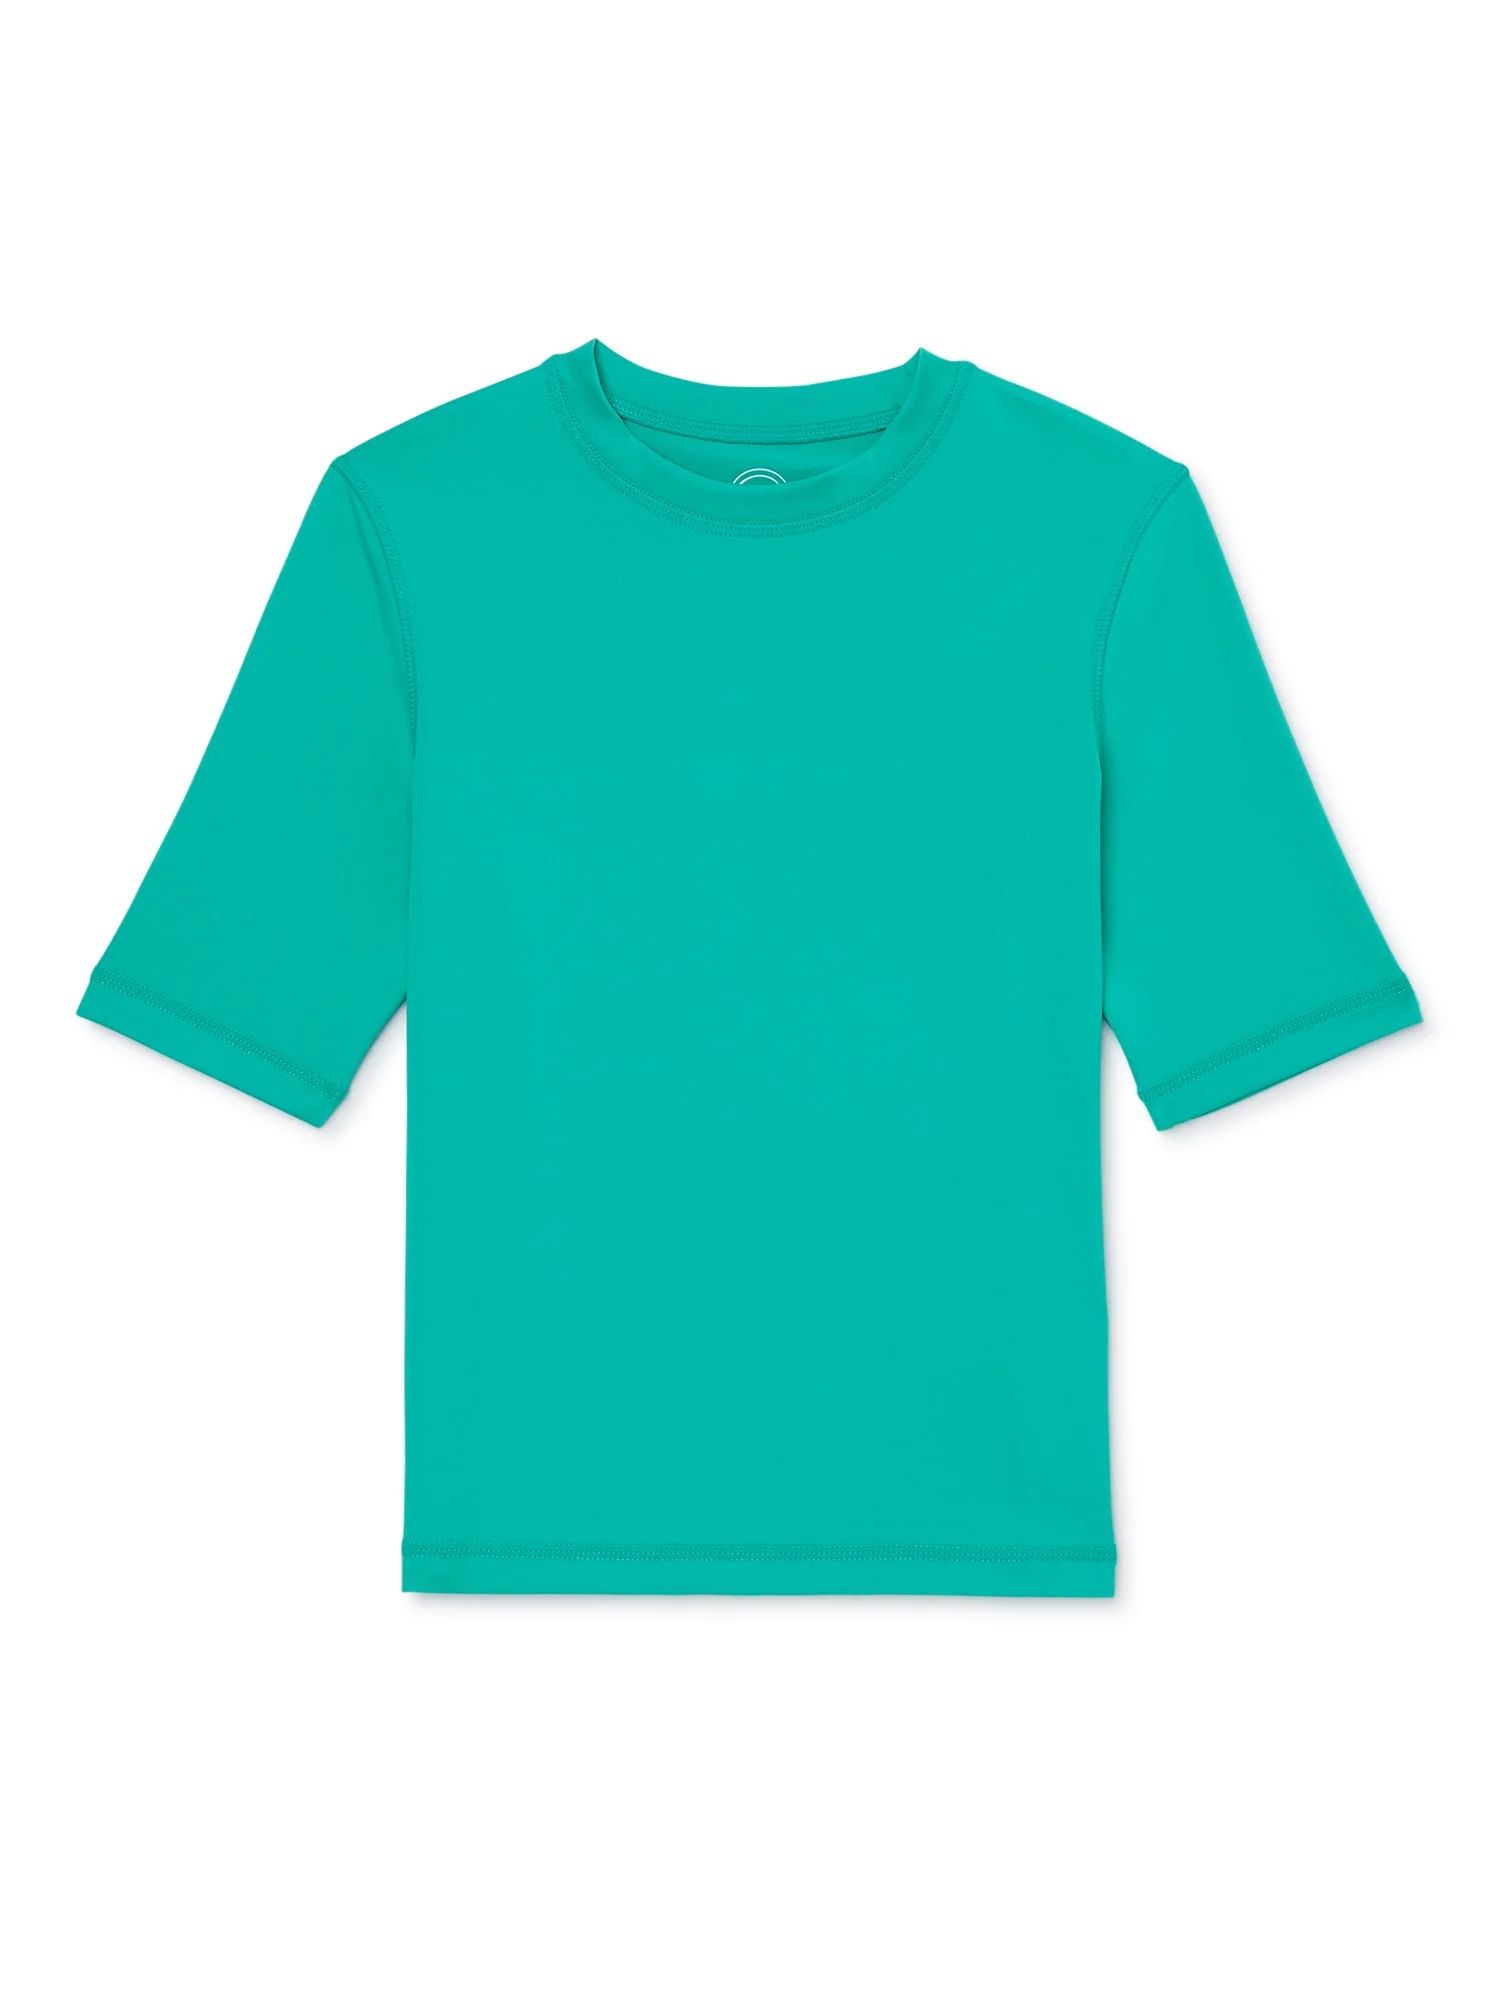 Wonder Nation Boys Short Sleeve Rashguard Shirt with UPF 50+, Sizes 4-18 & Husky | Walmart (US)